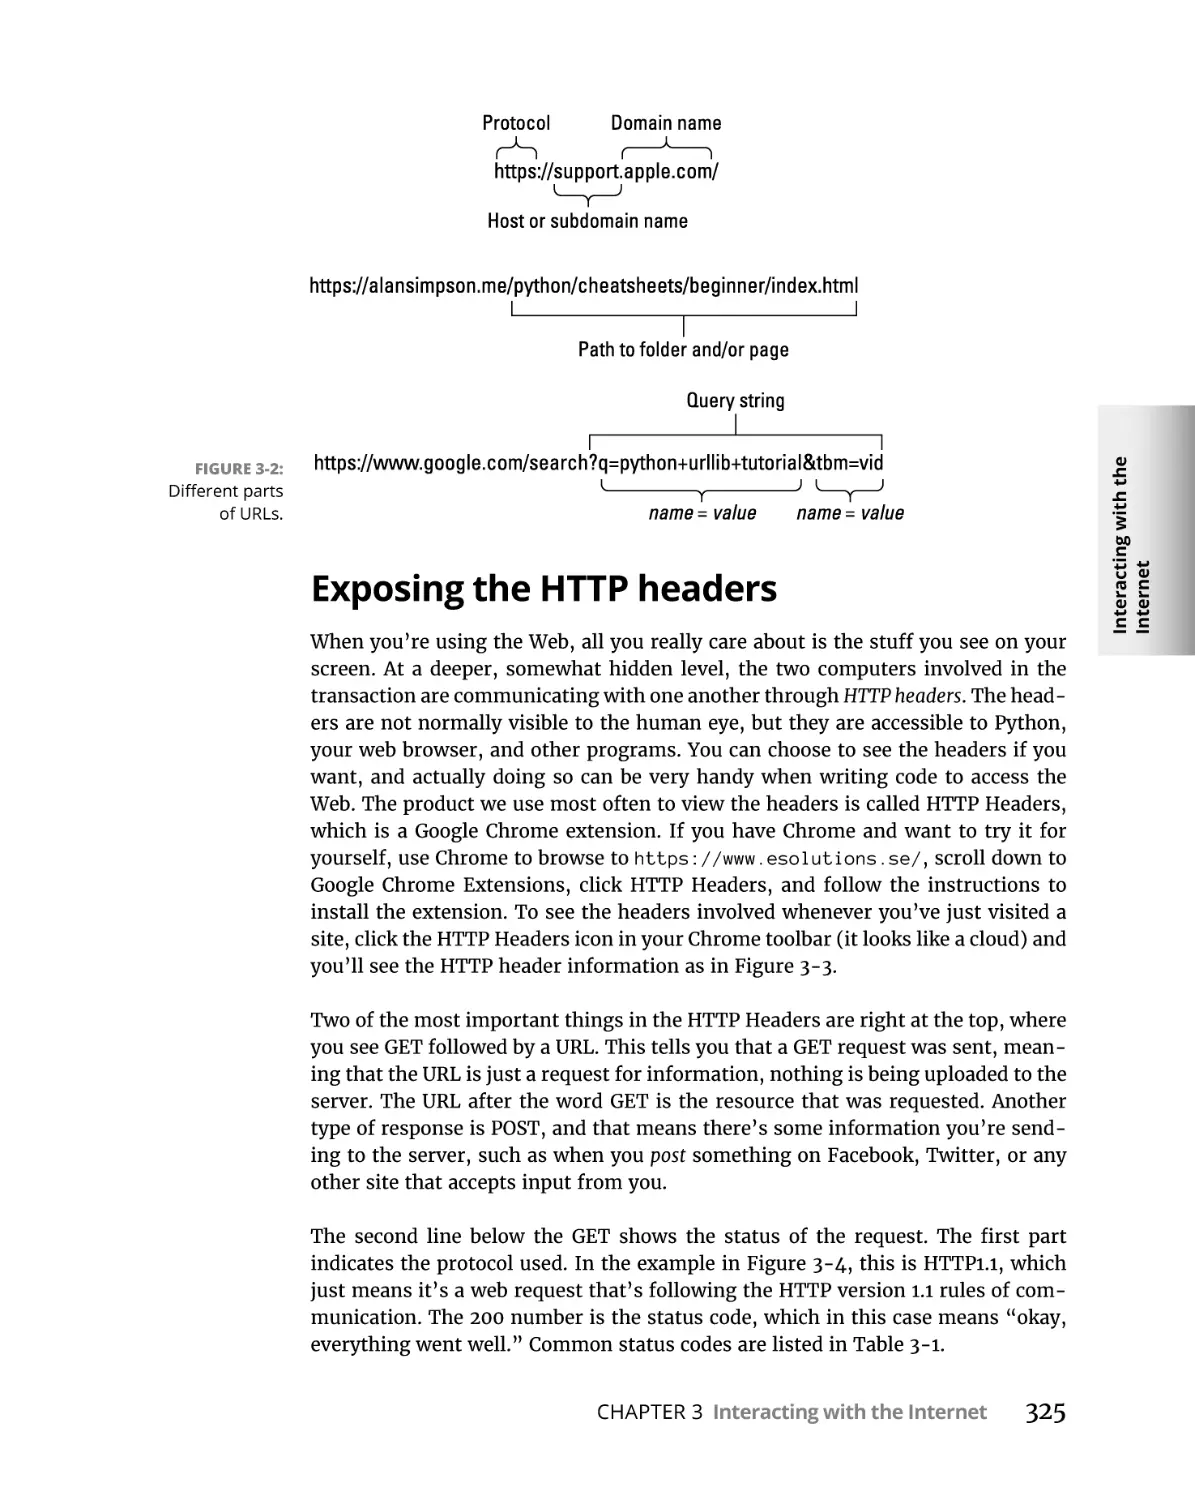 Exposing the HTTP headers